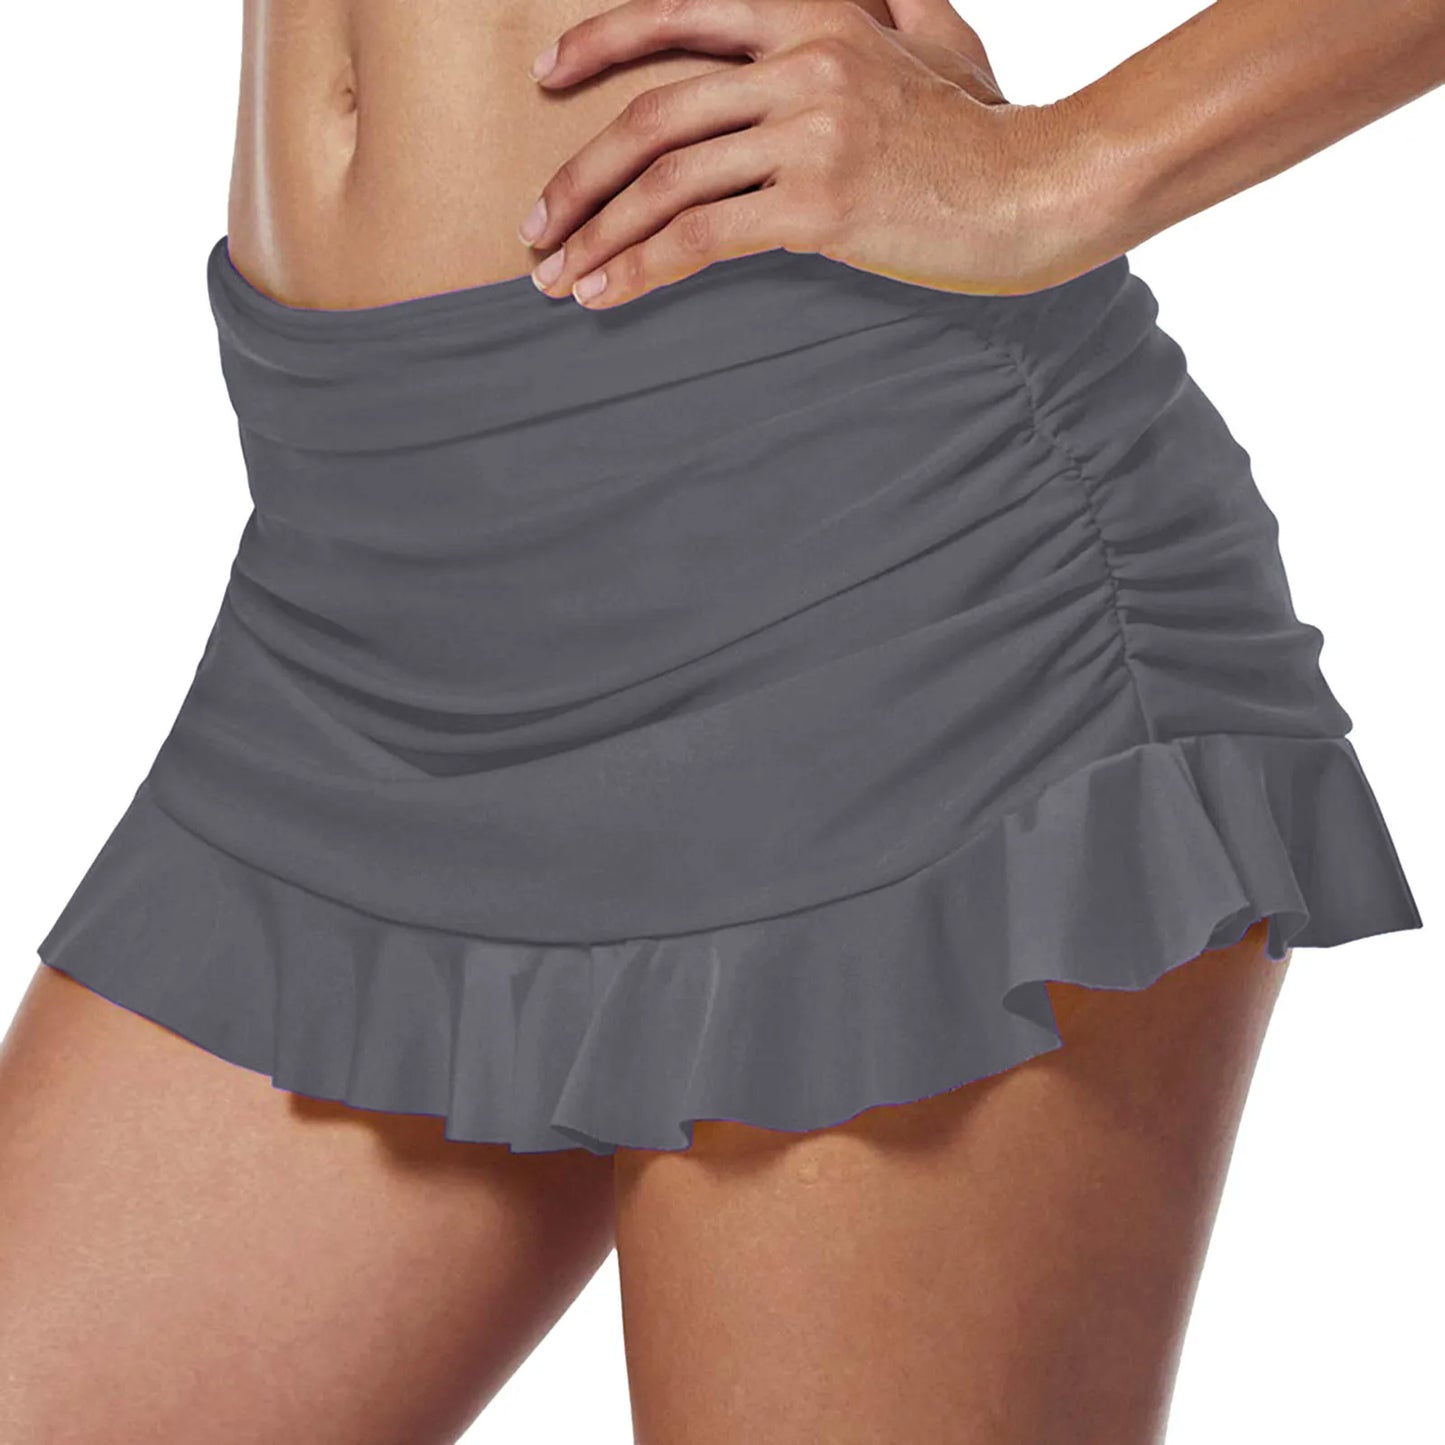 JuliaFashion - Swim Skirt High Waisted Ruched Bikini Bottom Sports Yoga Shorts Pure Color Swimbottom Skirt Dress